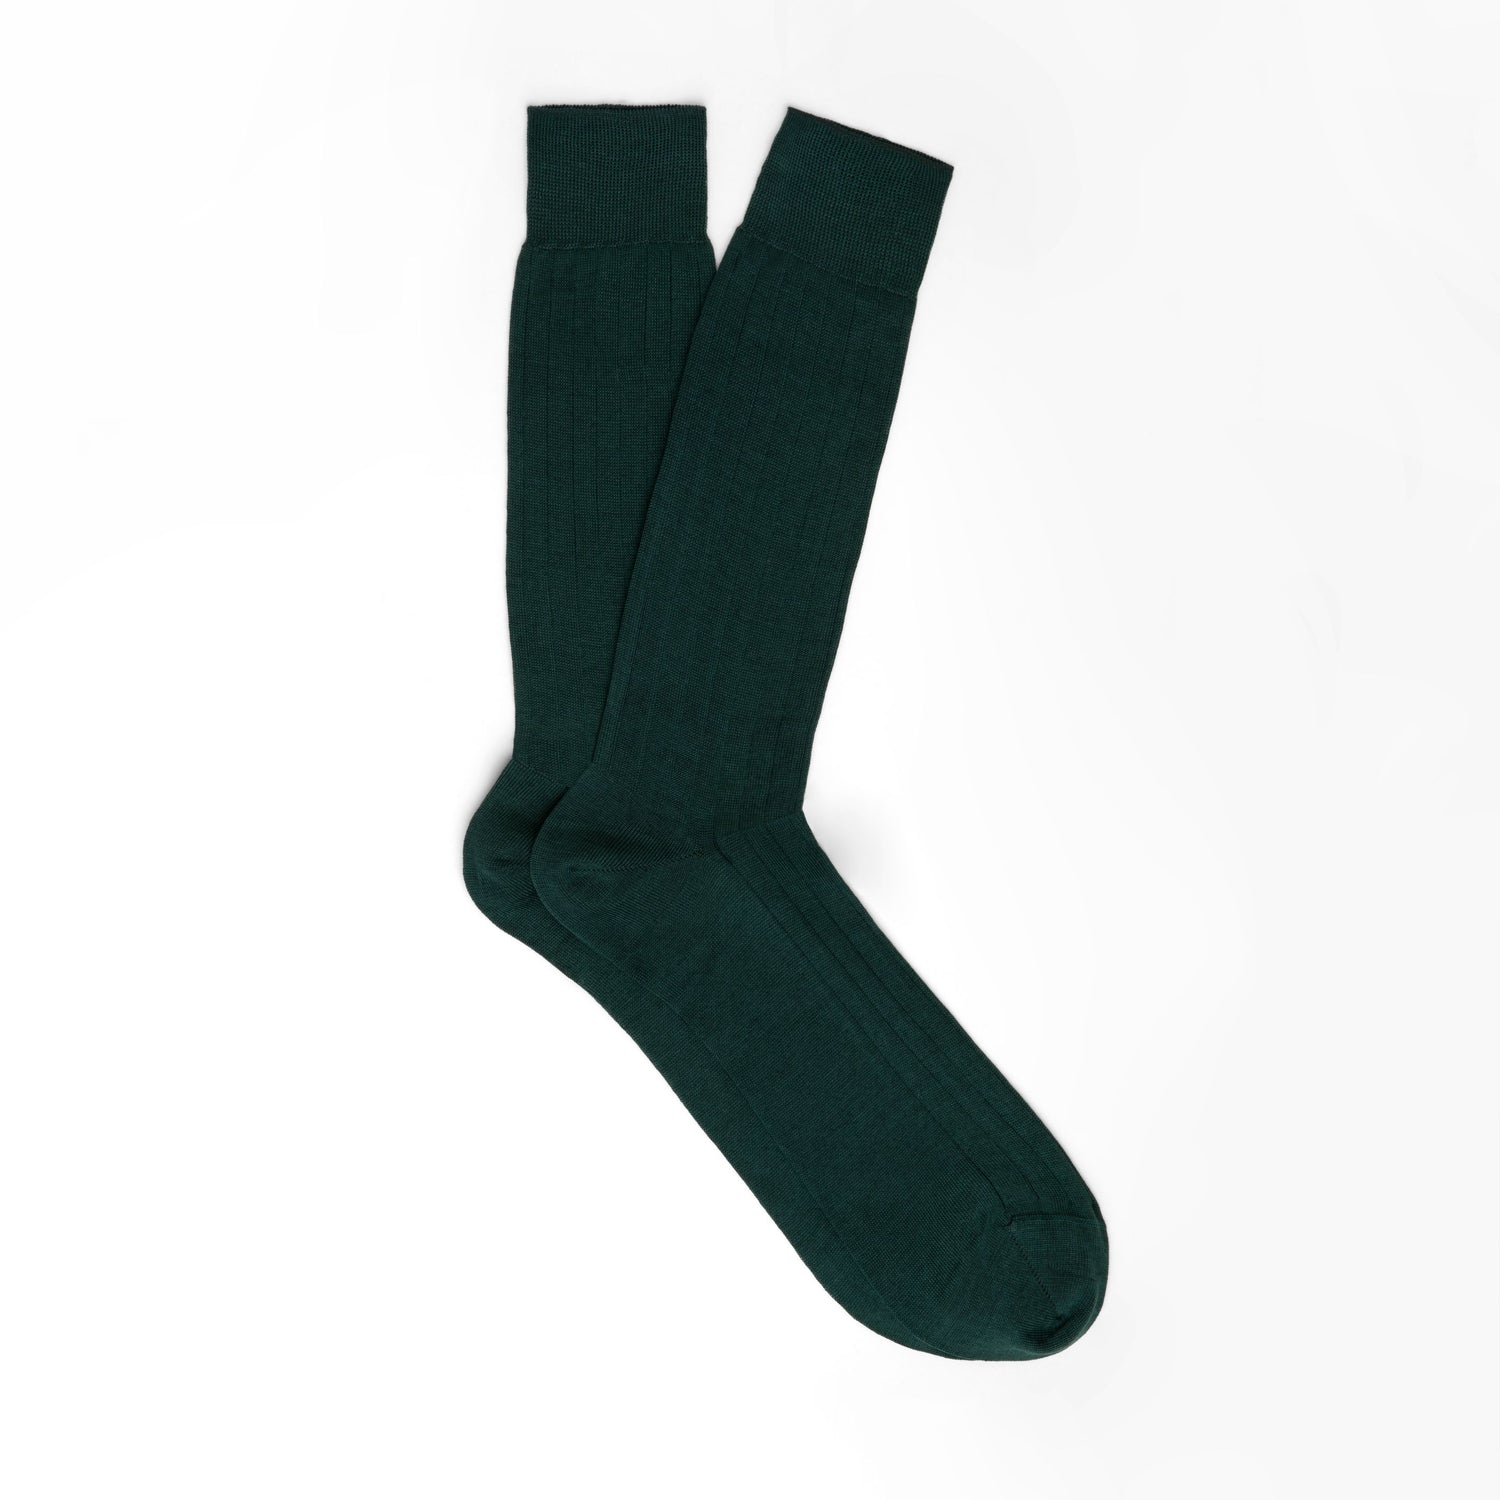 Long Green Socks